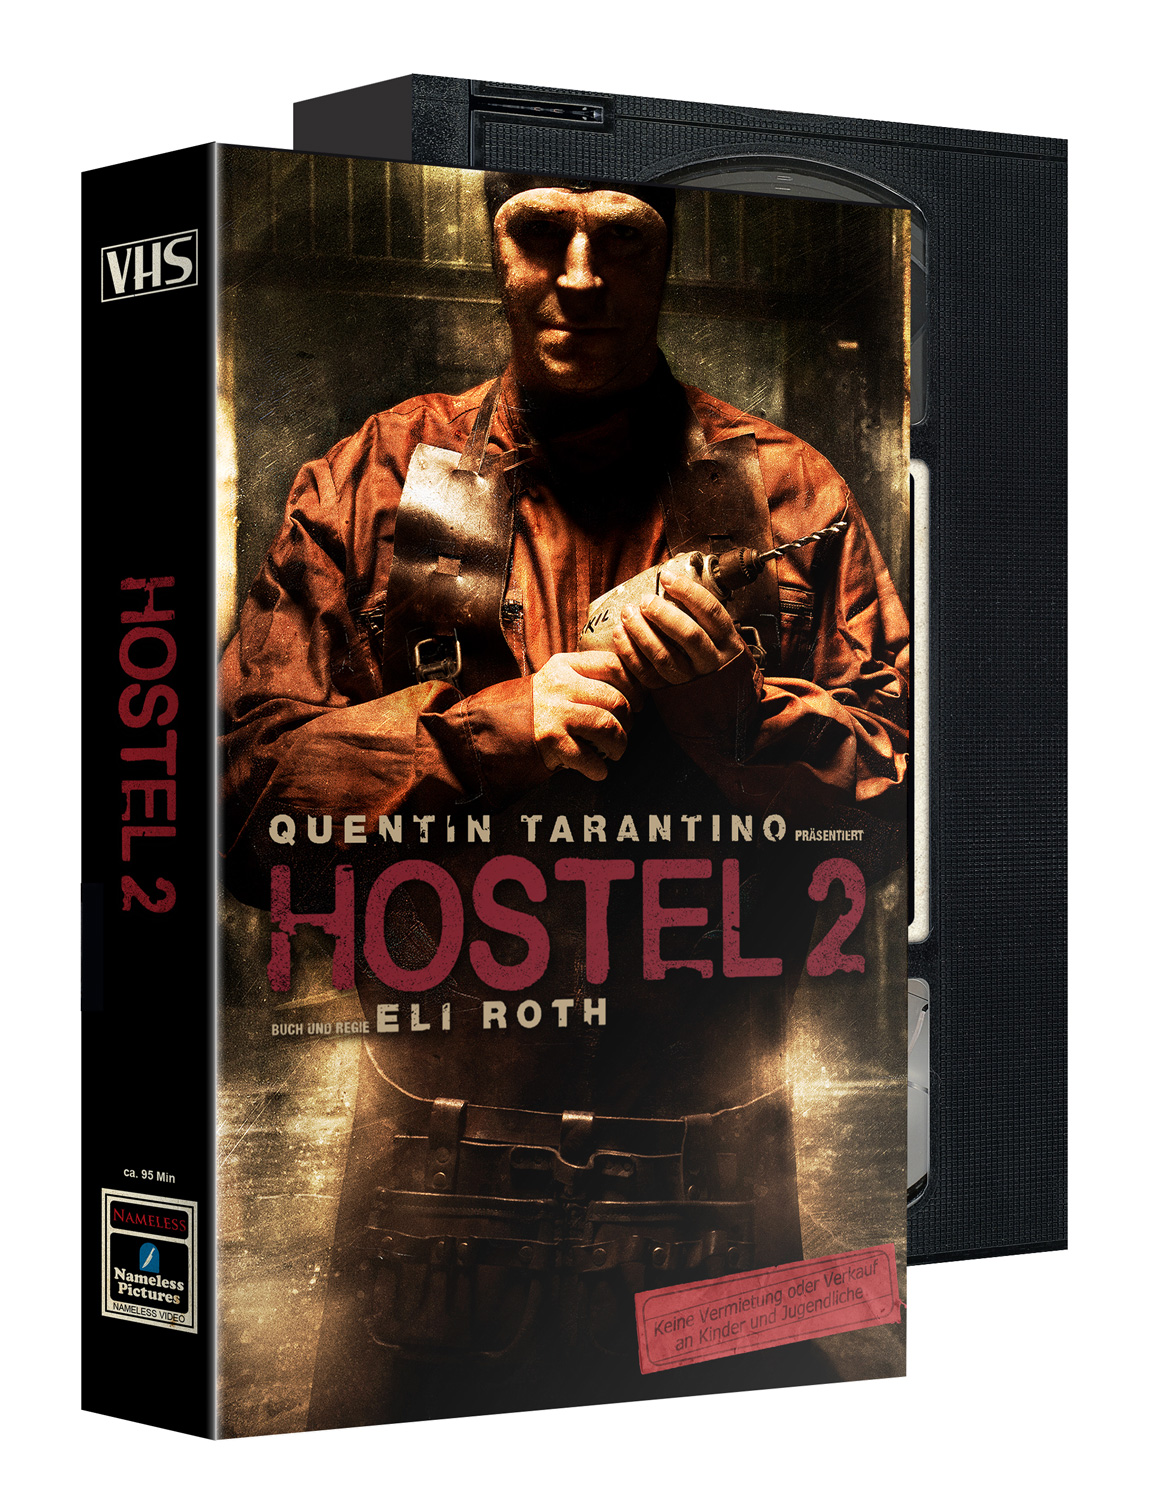 HOSTEL 2 VHS VINTAGE SLIPCASE